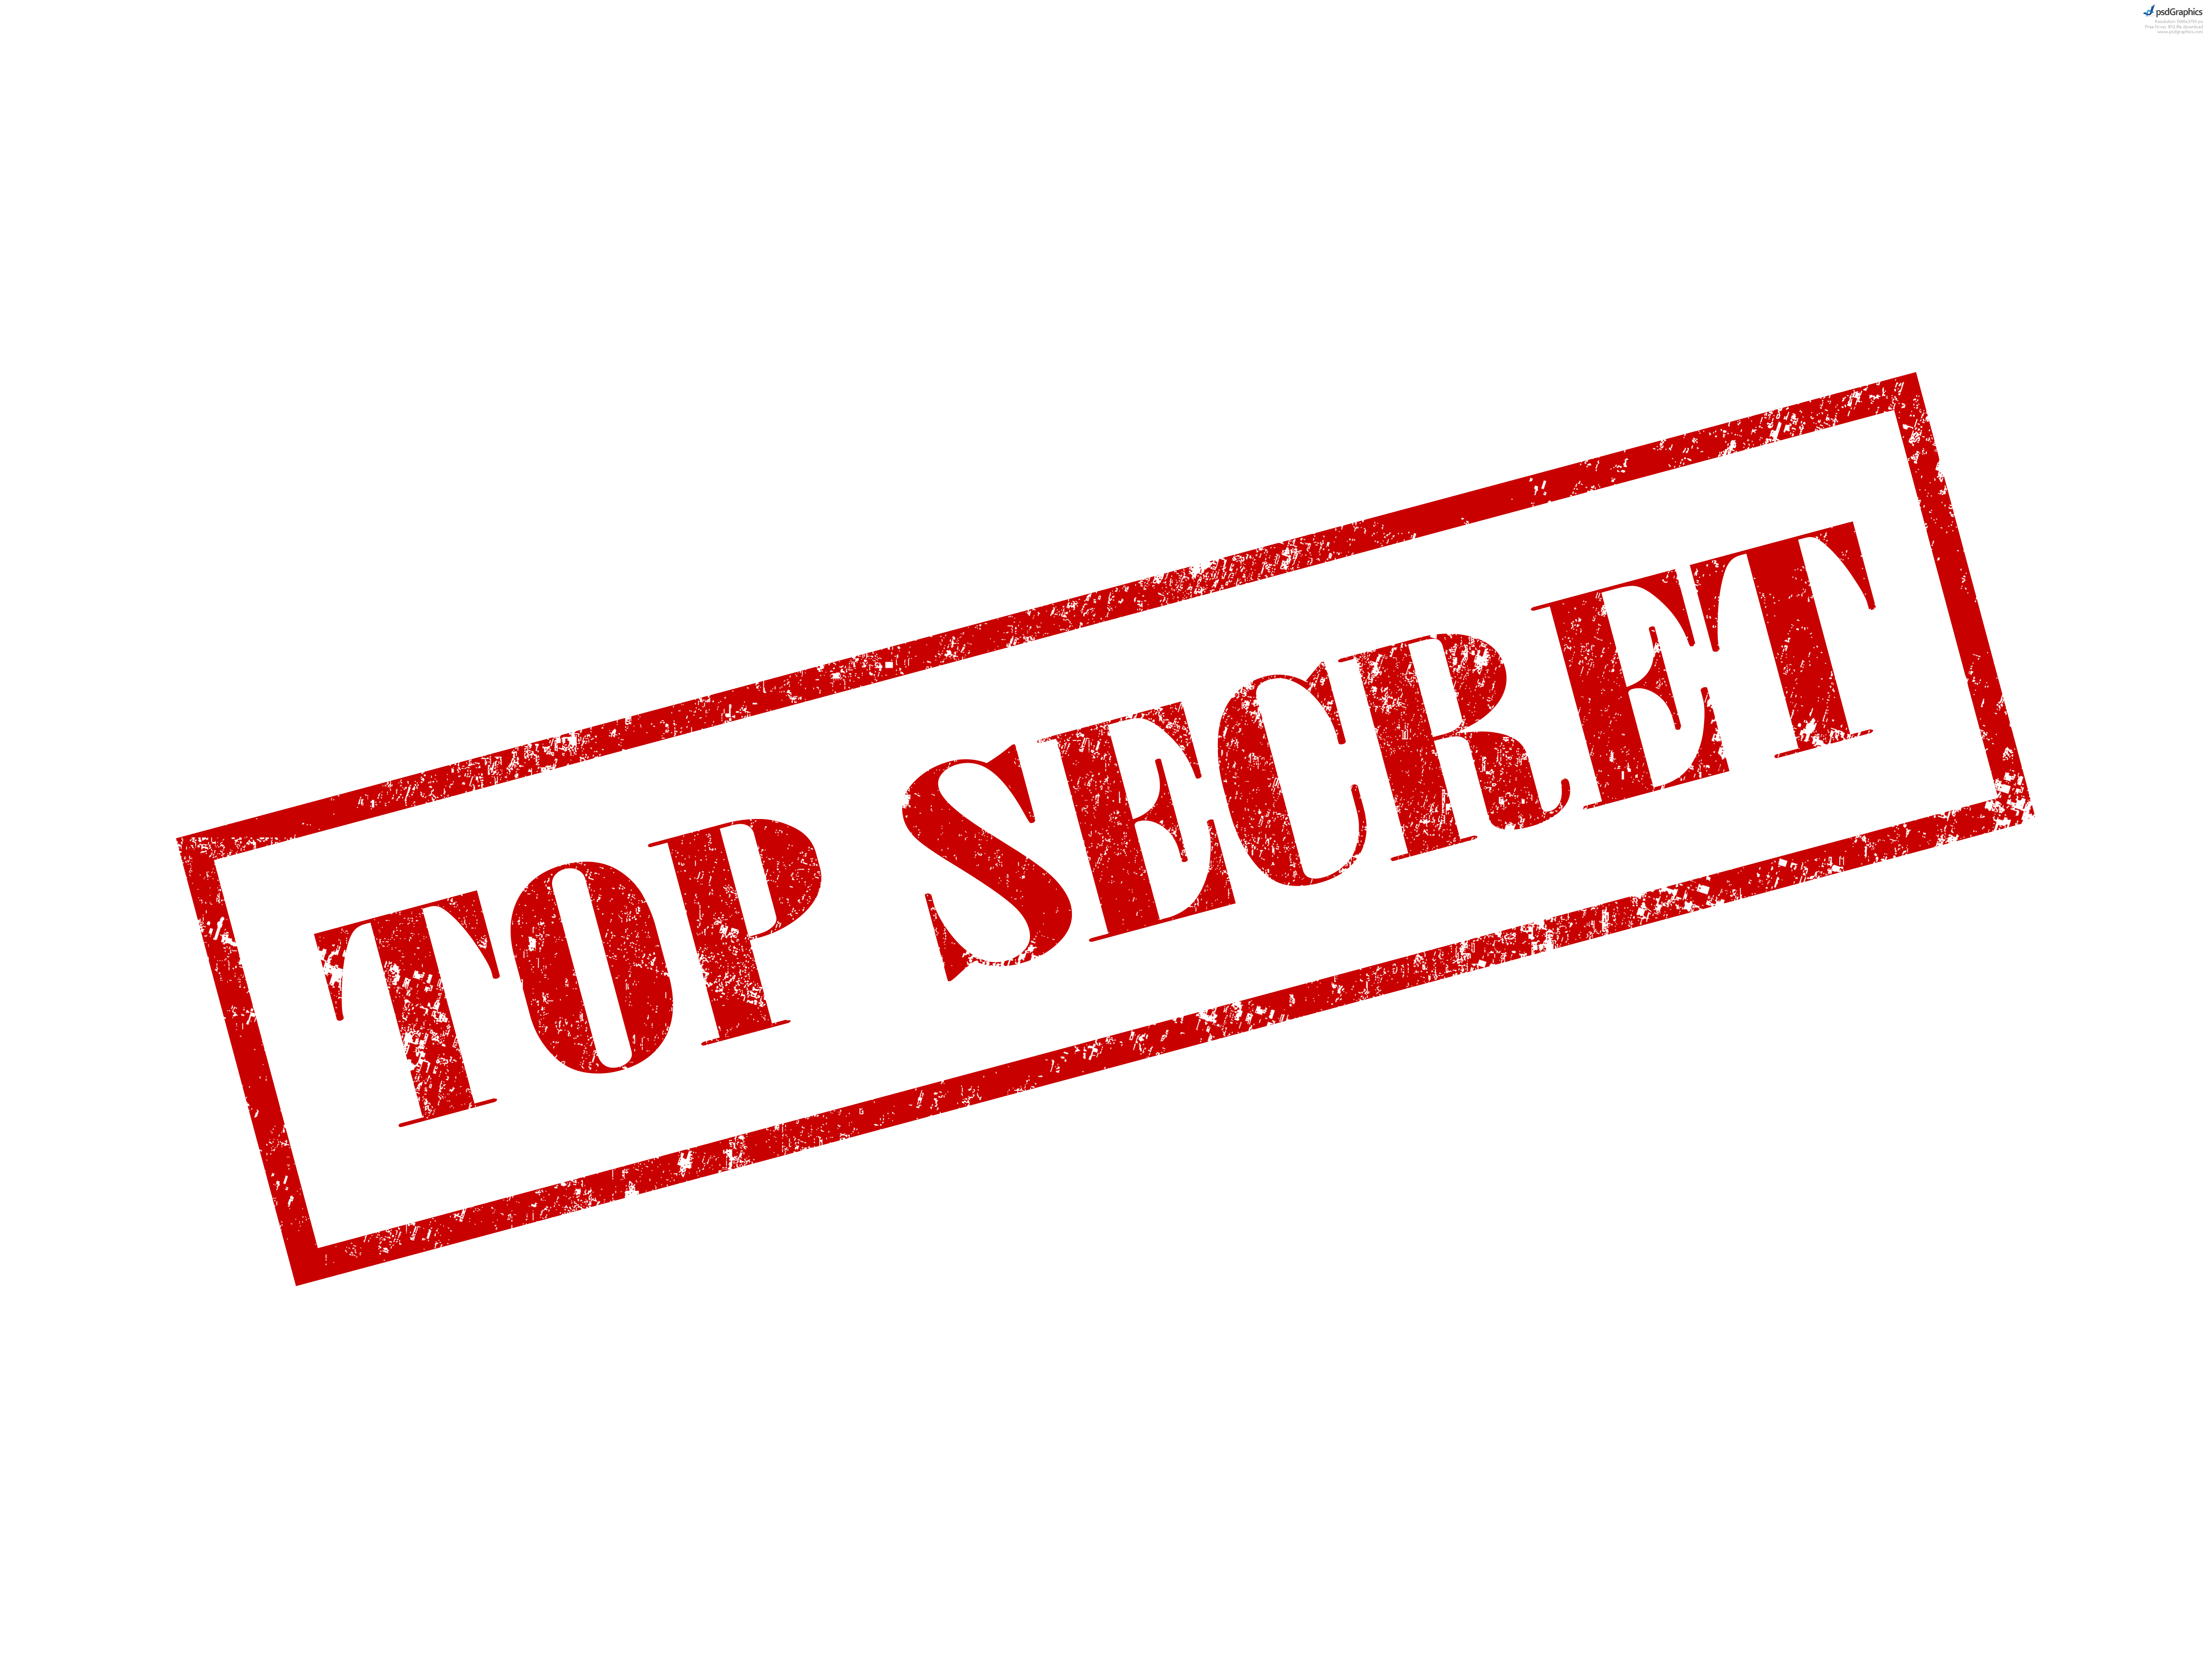 secrecy | Prof Chris Daly's Blog